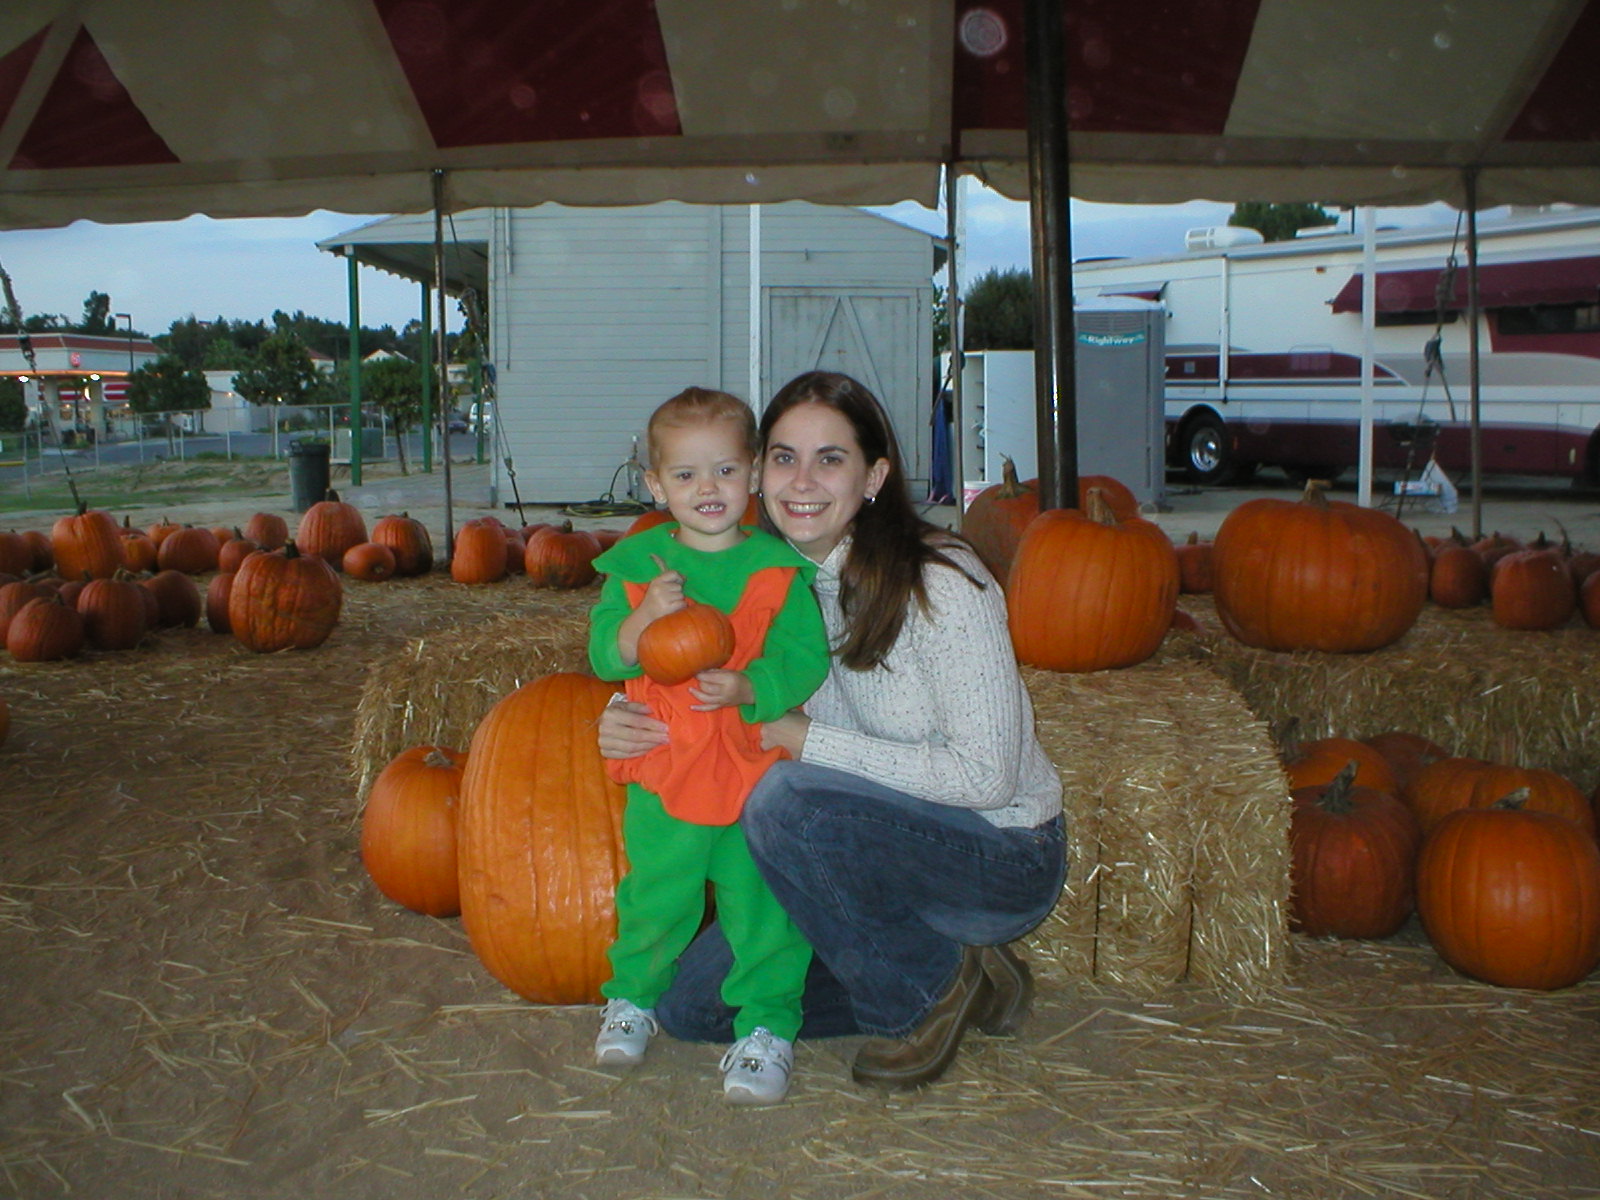 At the "Pumpkin Park" Amy & Kaylin